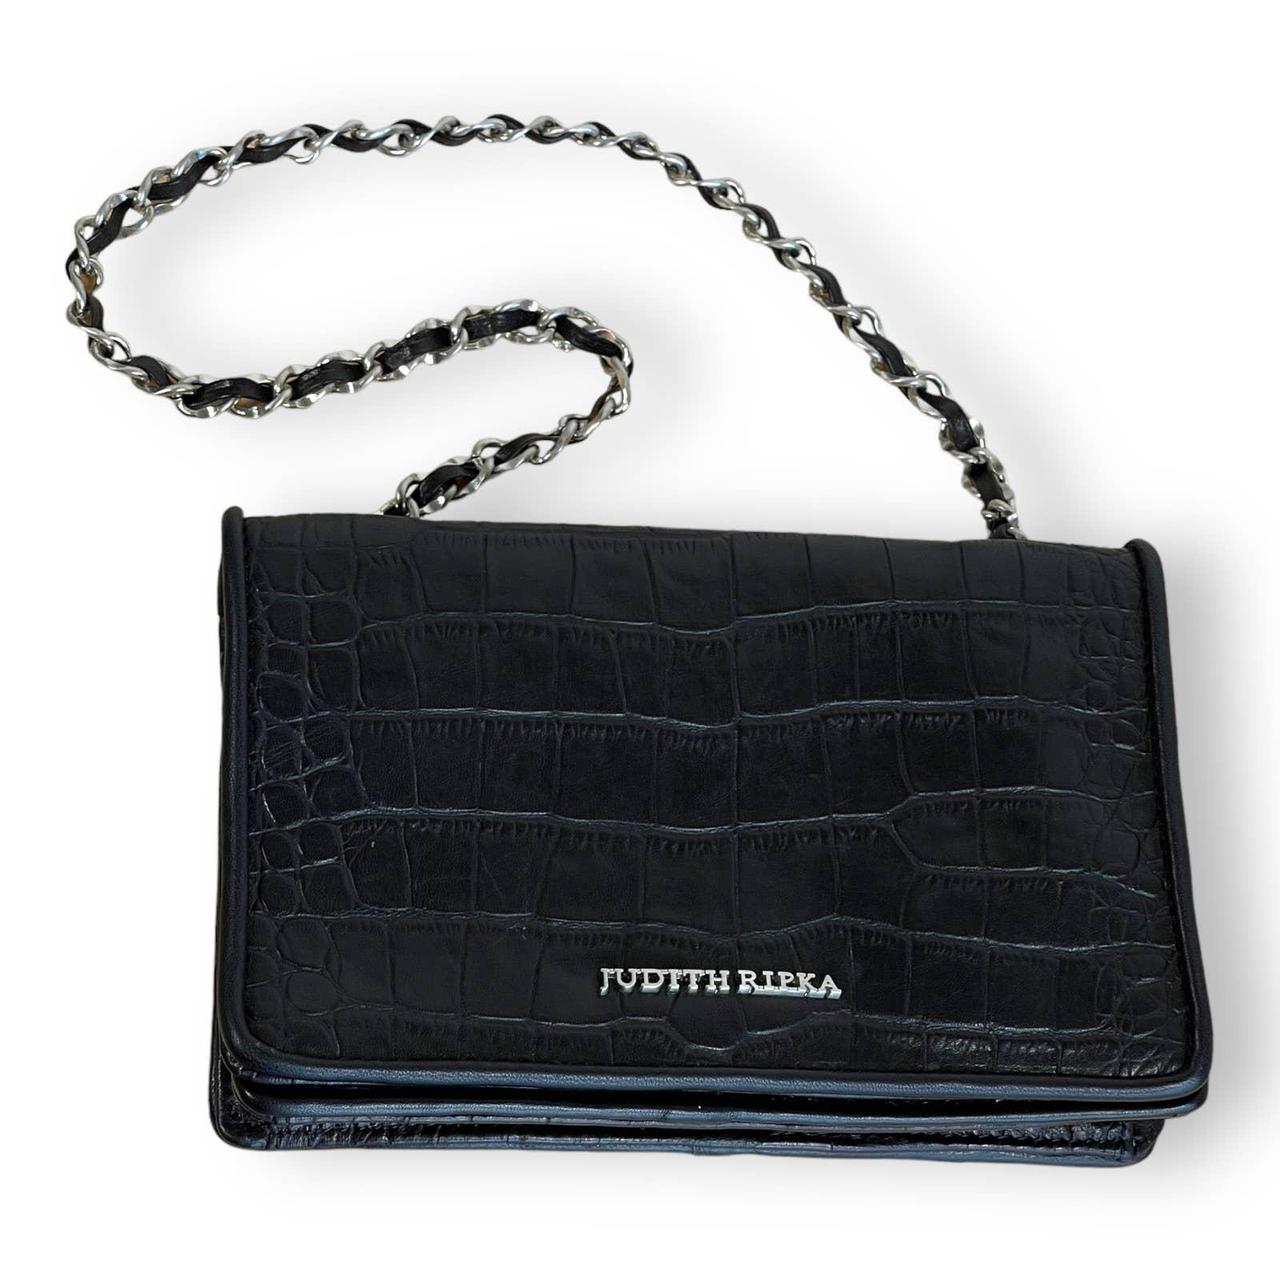 Michael kors purse small crossbody bag mirella - Women's handbags